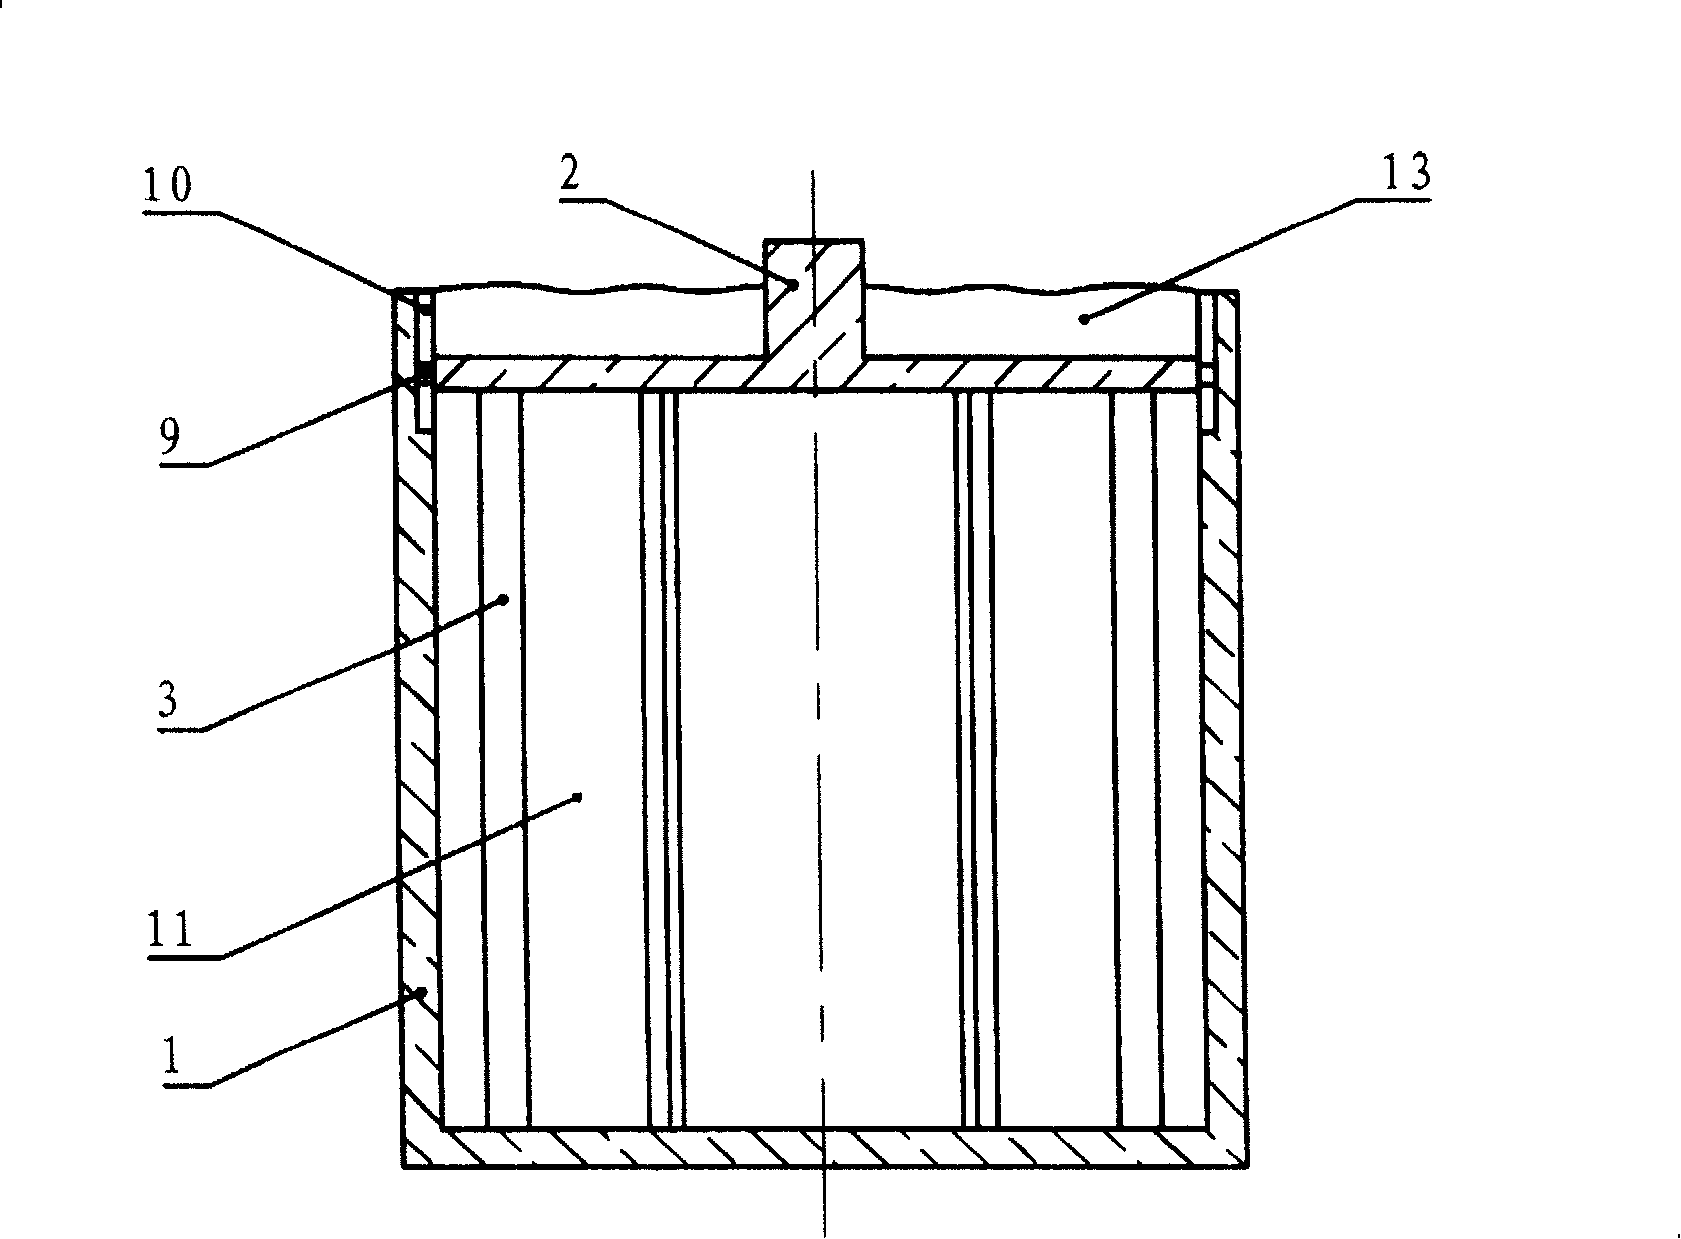 Non-linear press-rod spring device